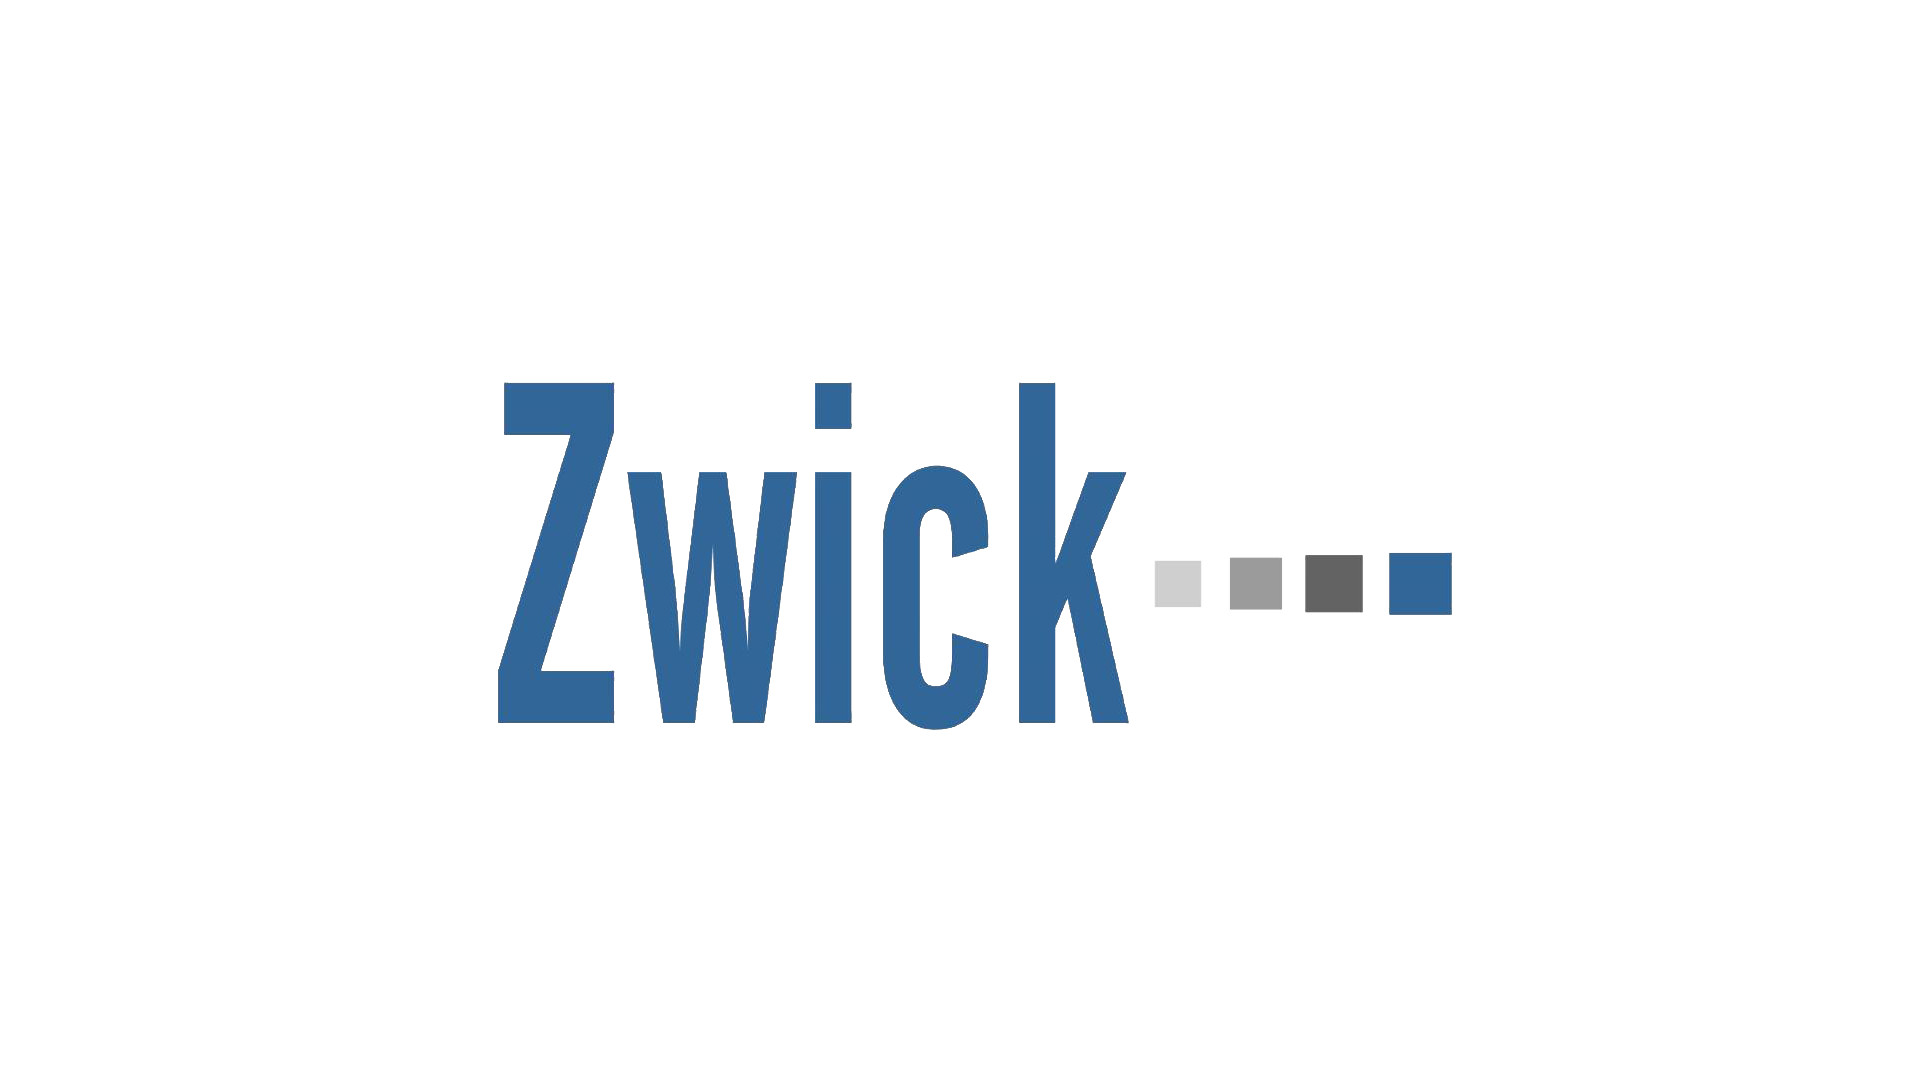 Zwick